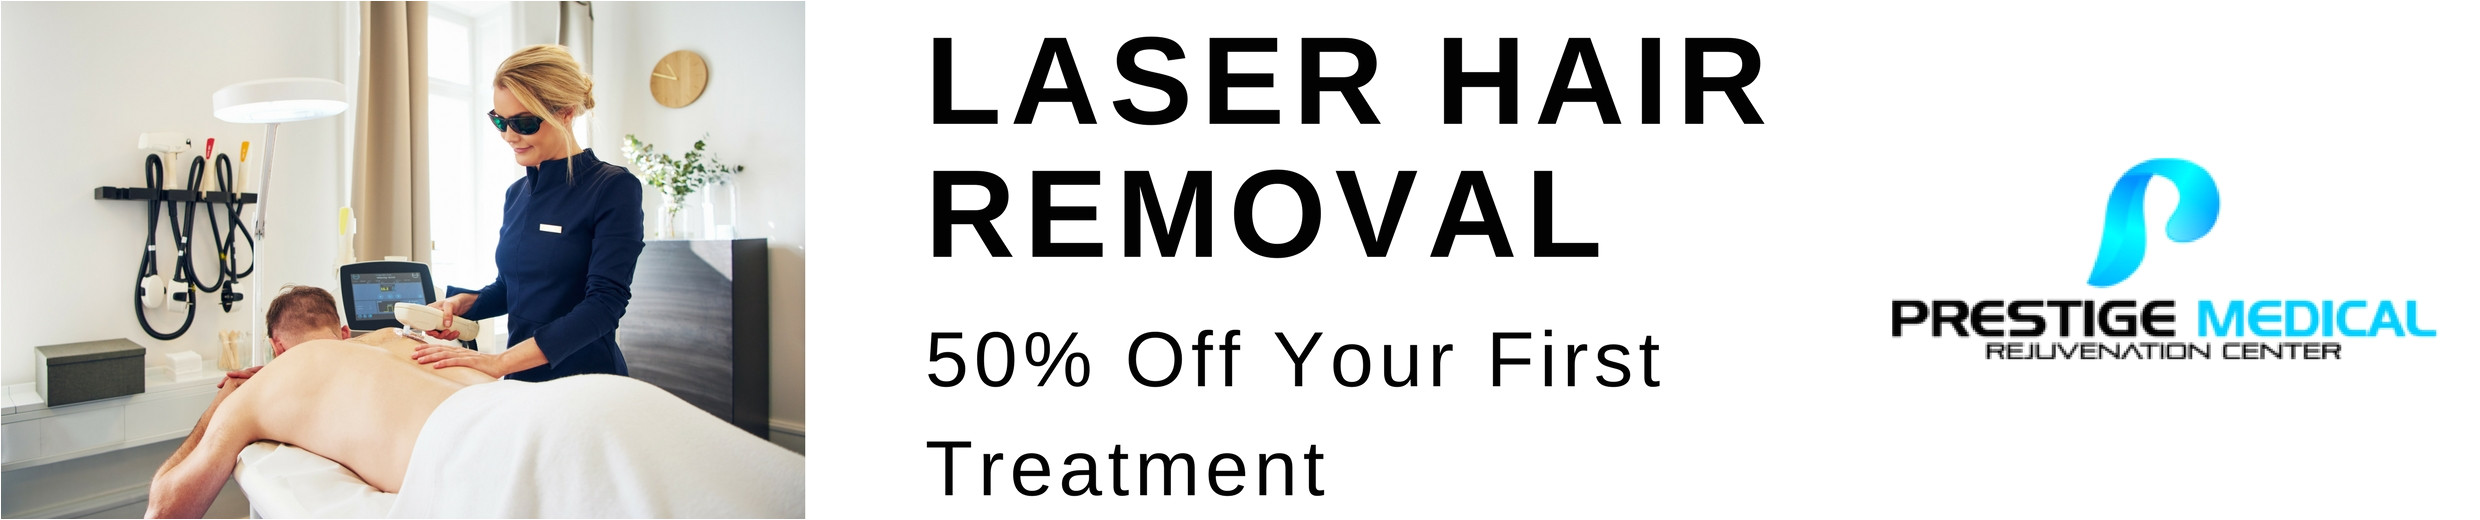 laser hair removal at prestige medical rejuvenation center in omaha nebraska